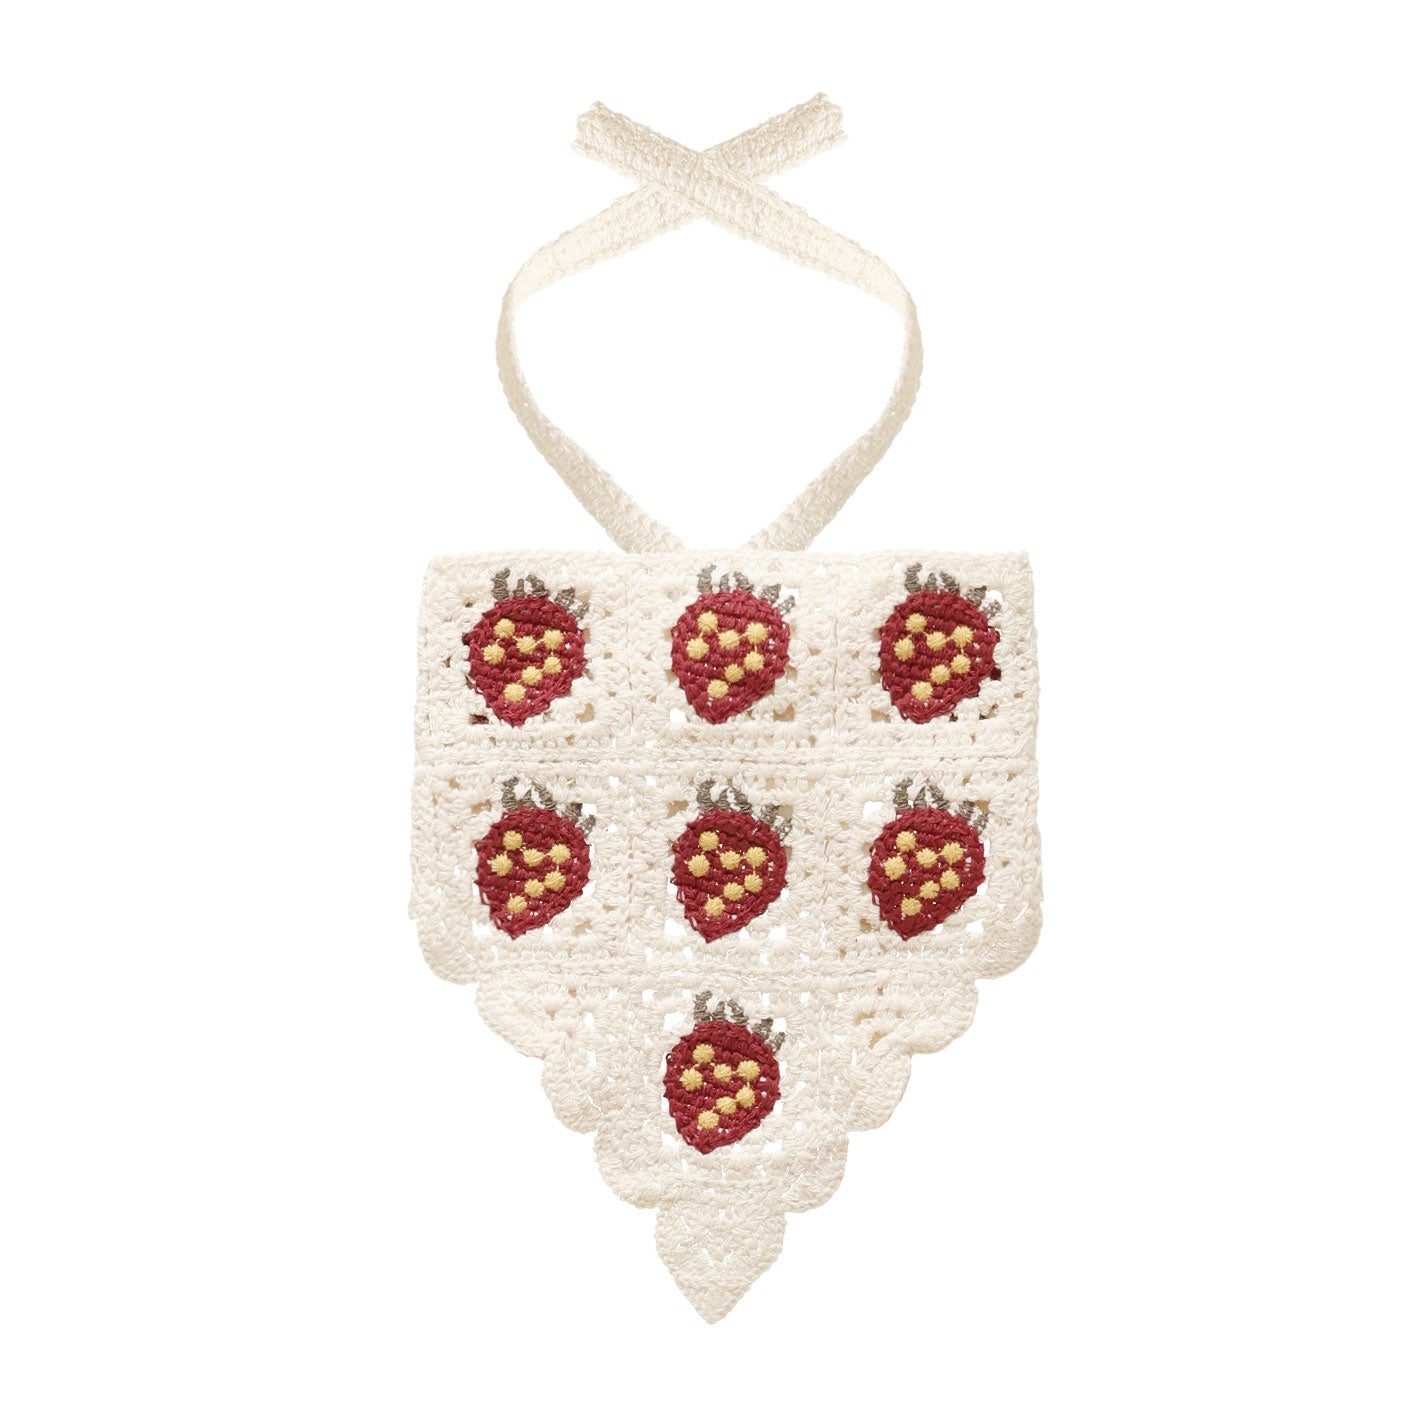 Rylee and Cru Crochet Head Scarf - Strawberry Pattern - Ivory